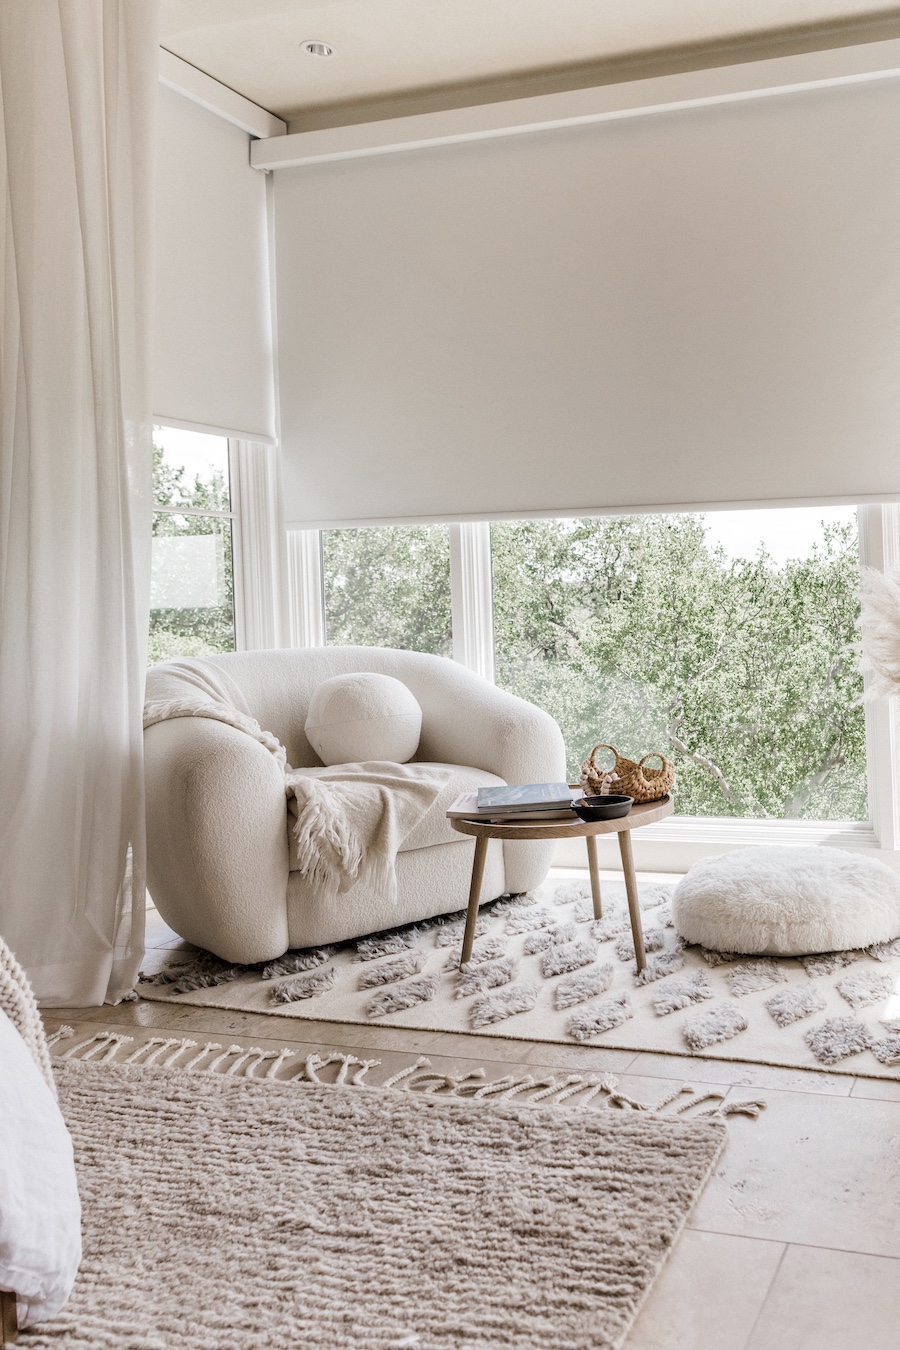 Camille Styles bedroom window treatments-window treatment design tips